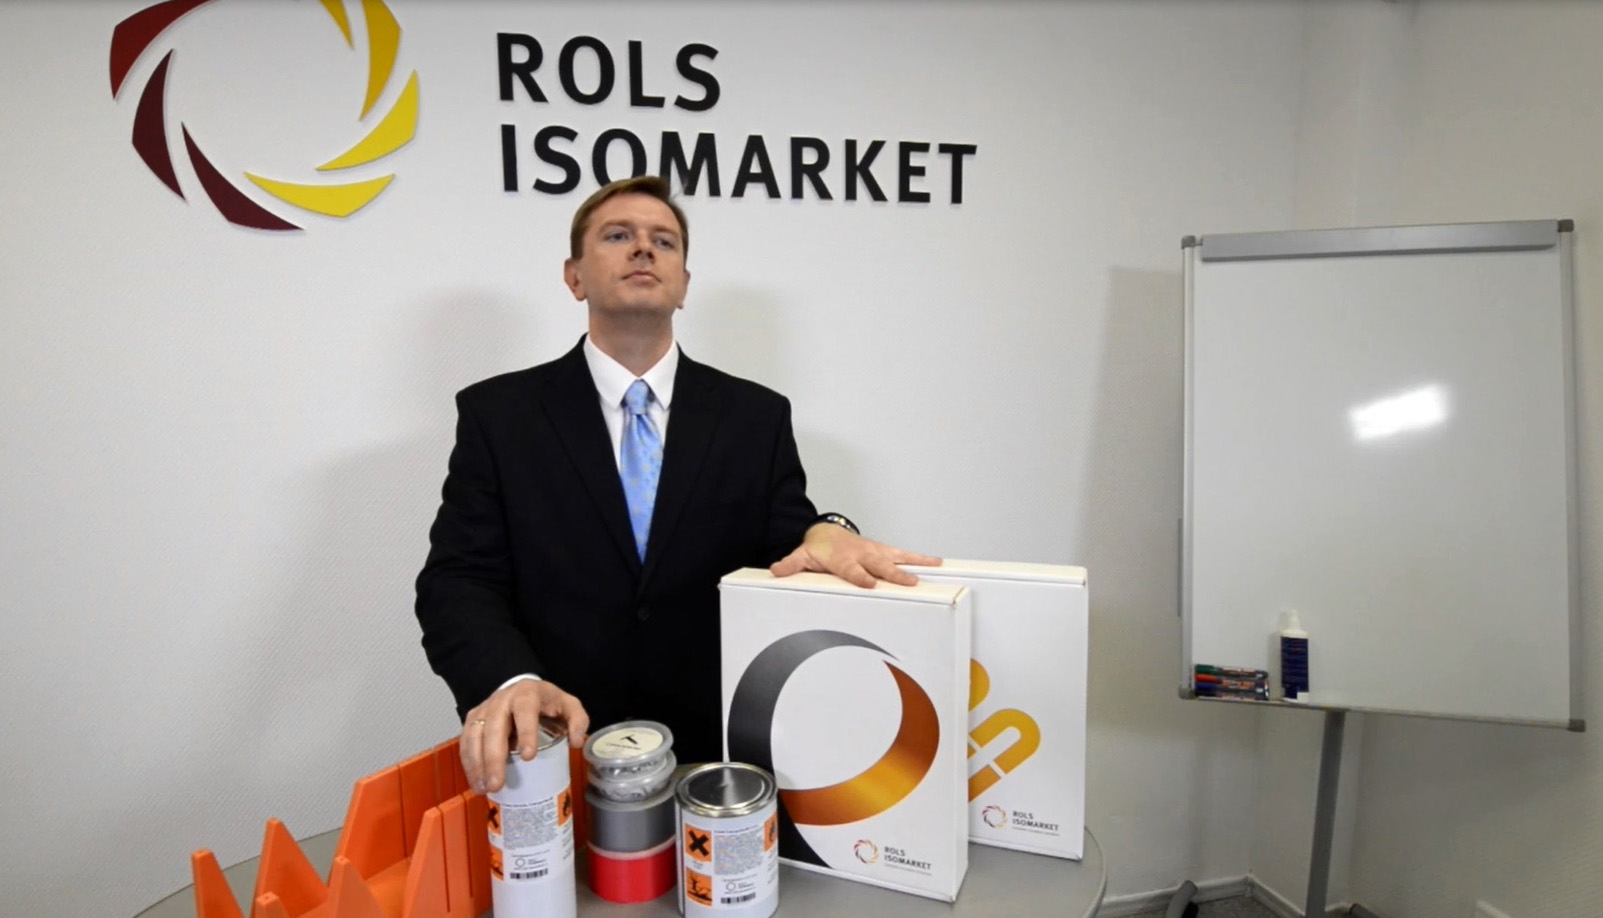 The updated presentation of ROLS ISOMARKET